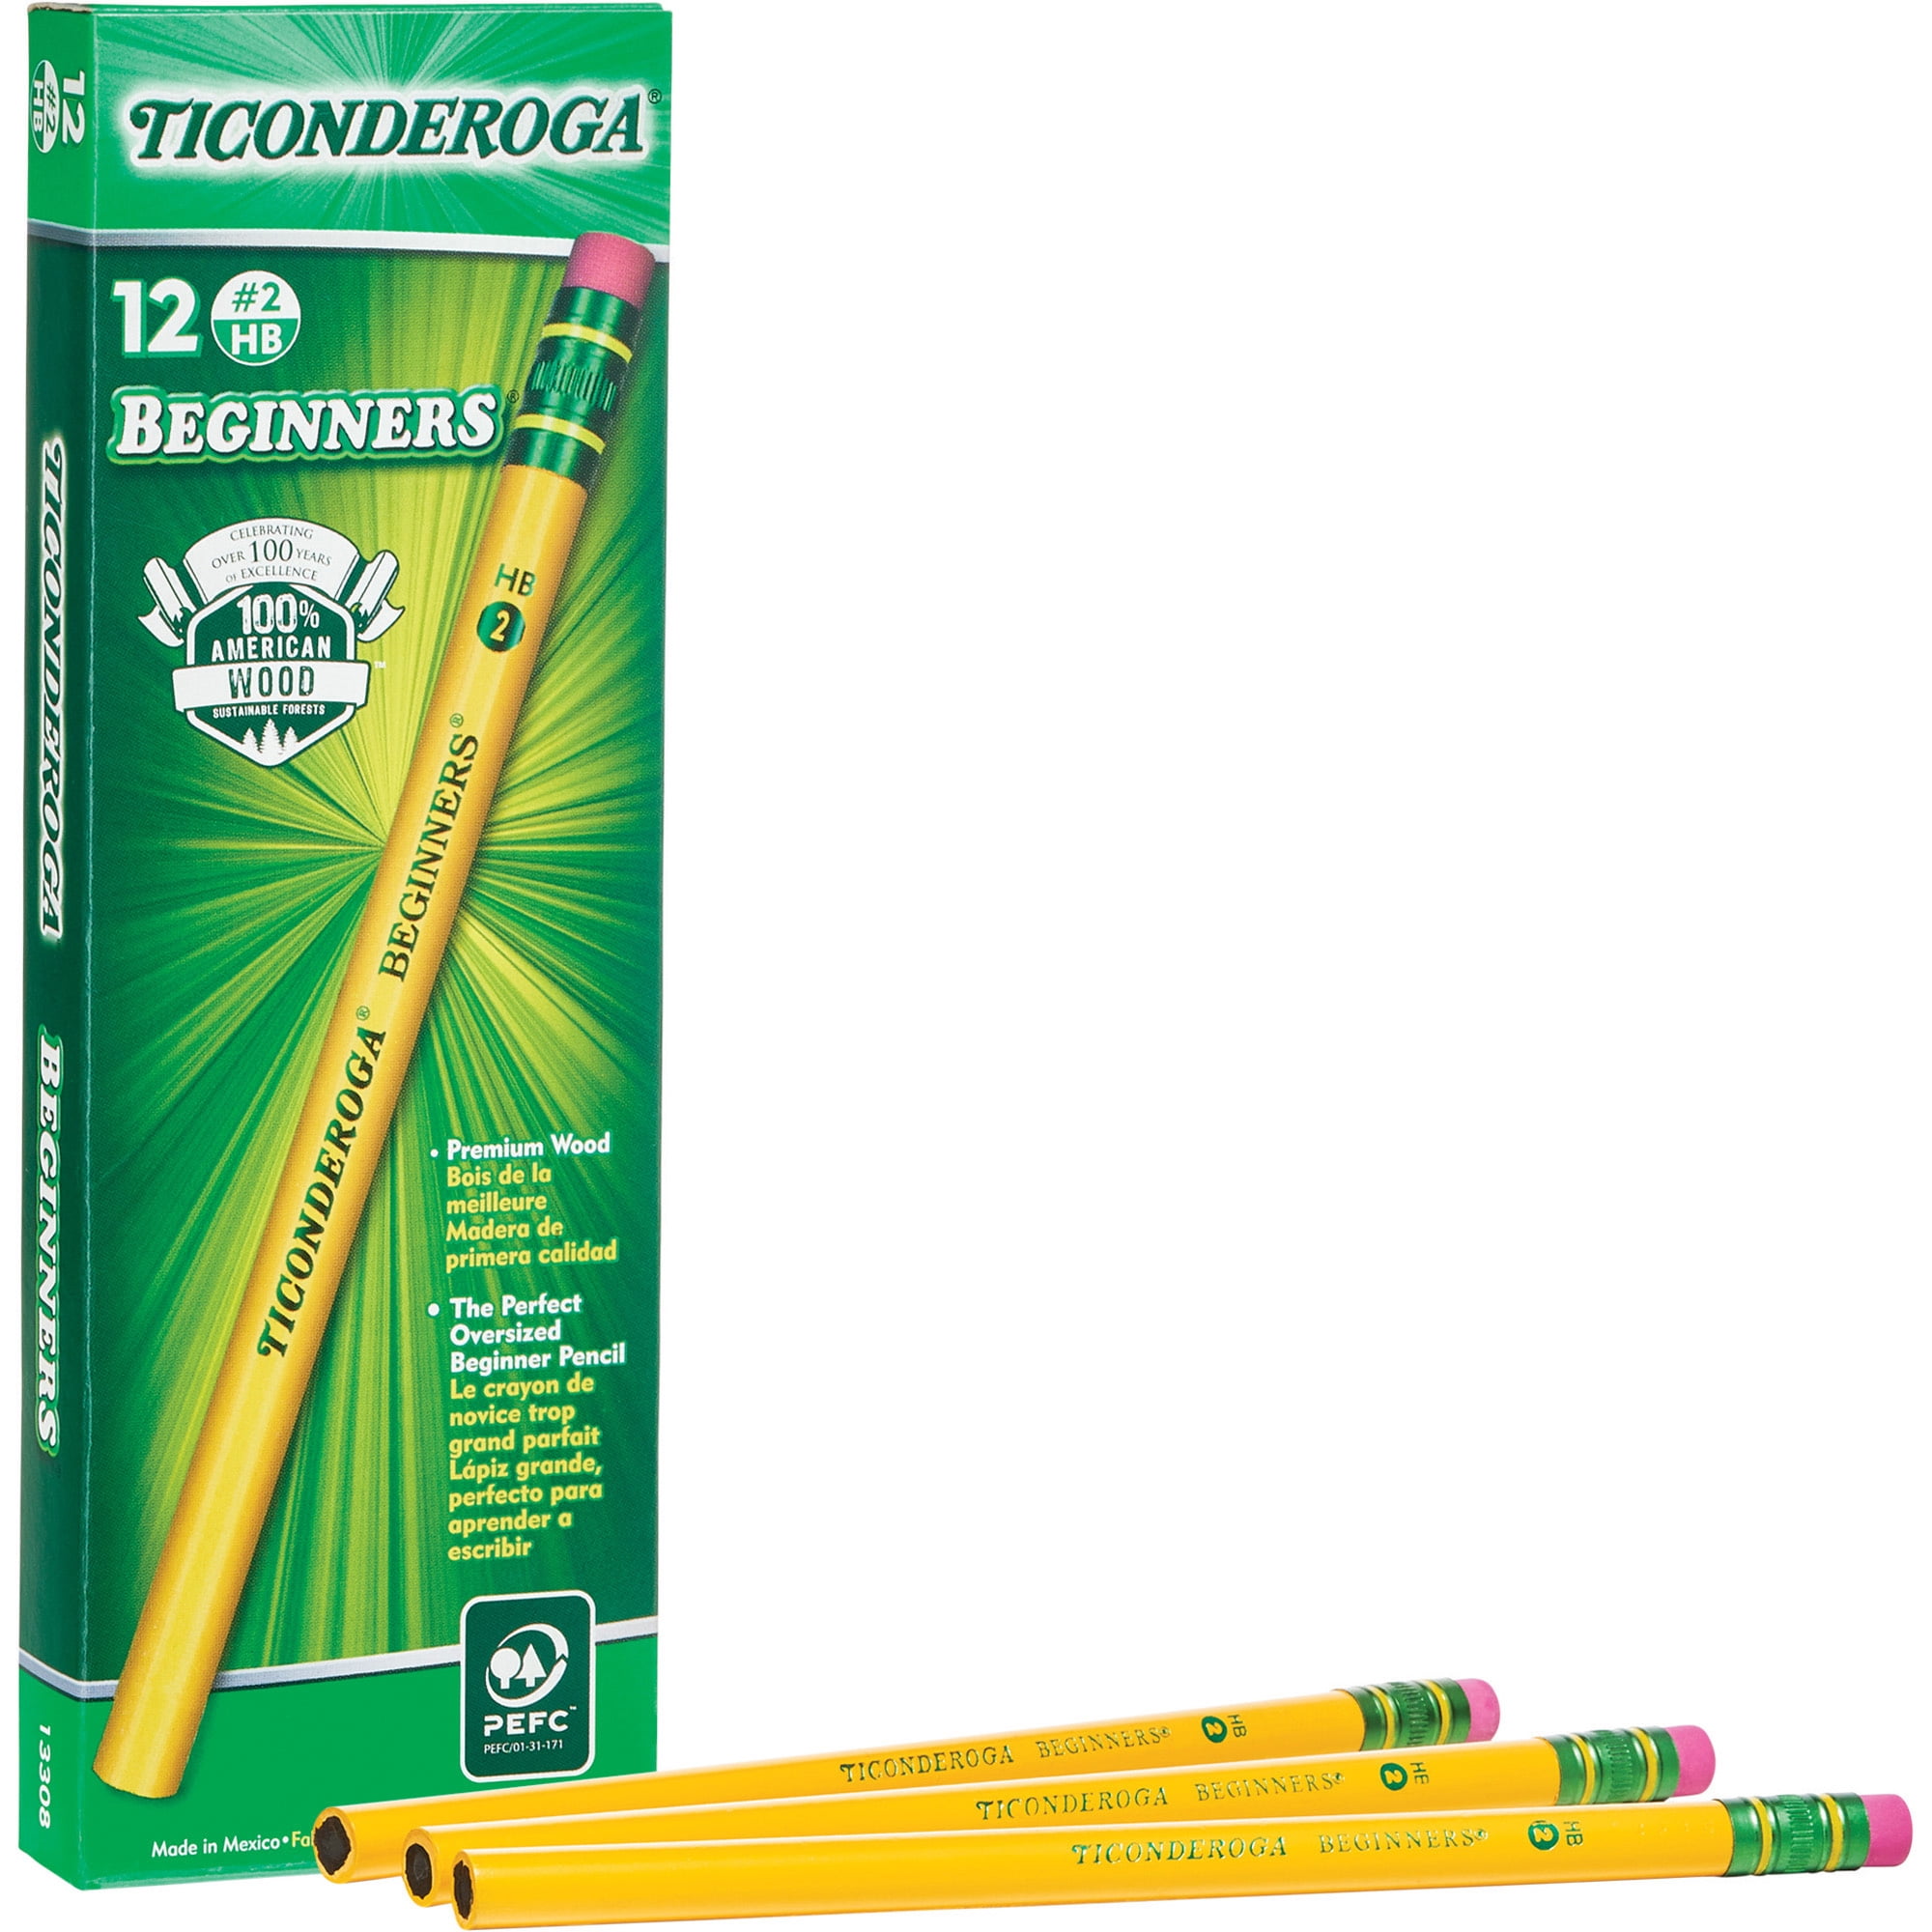 2 Pencils 2hb Lead PMA Certified Pencil 48 Pencils for sale online Staedtler Essential No 